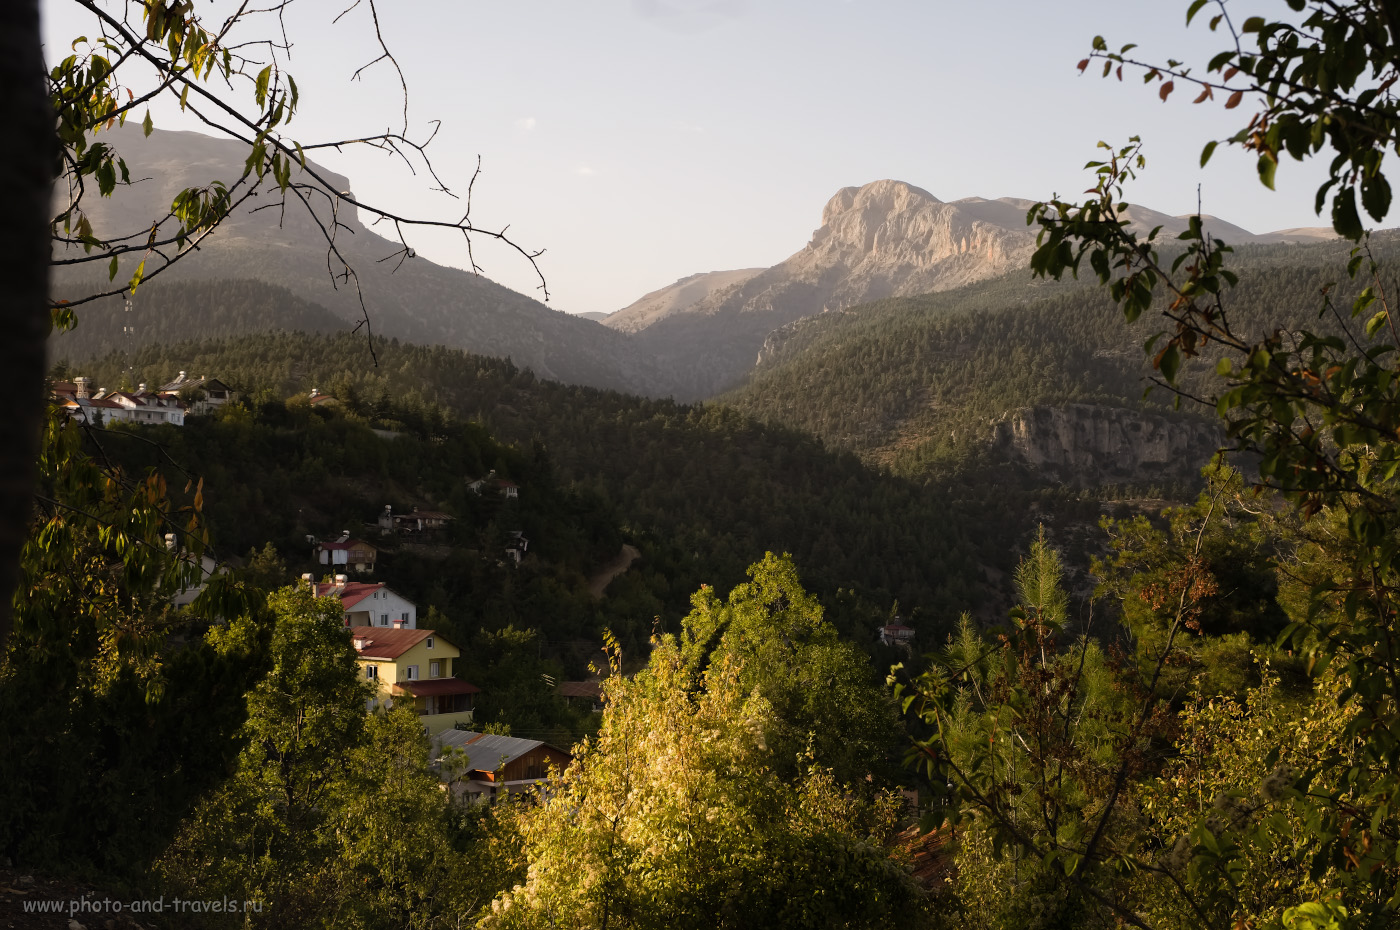 Фотография 8. Вид на горы Кюмбет (Kümbet Tepesi) справа (2473 метра) и Гёрюш (Görüş Tepesi) слева (2351 метр). Настройки: 1/80, 11.0, 200, -0.67, 24.